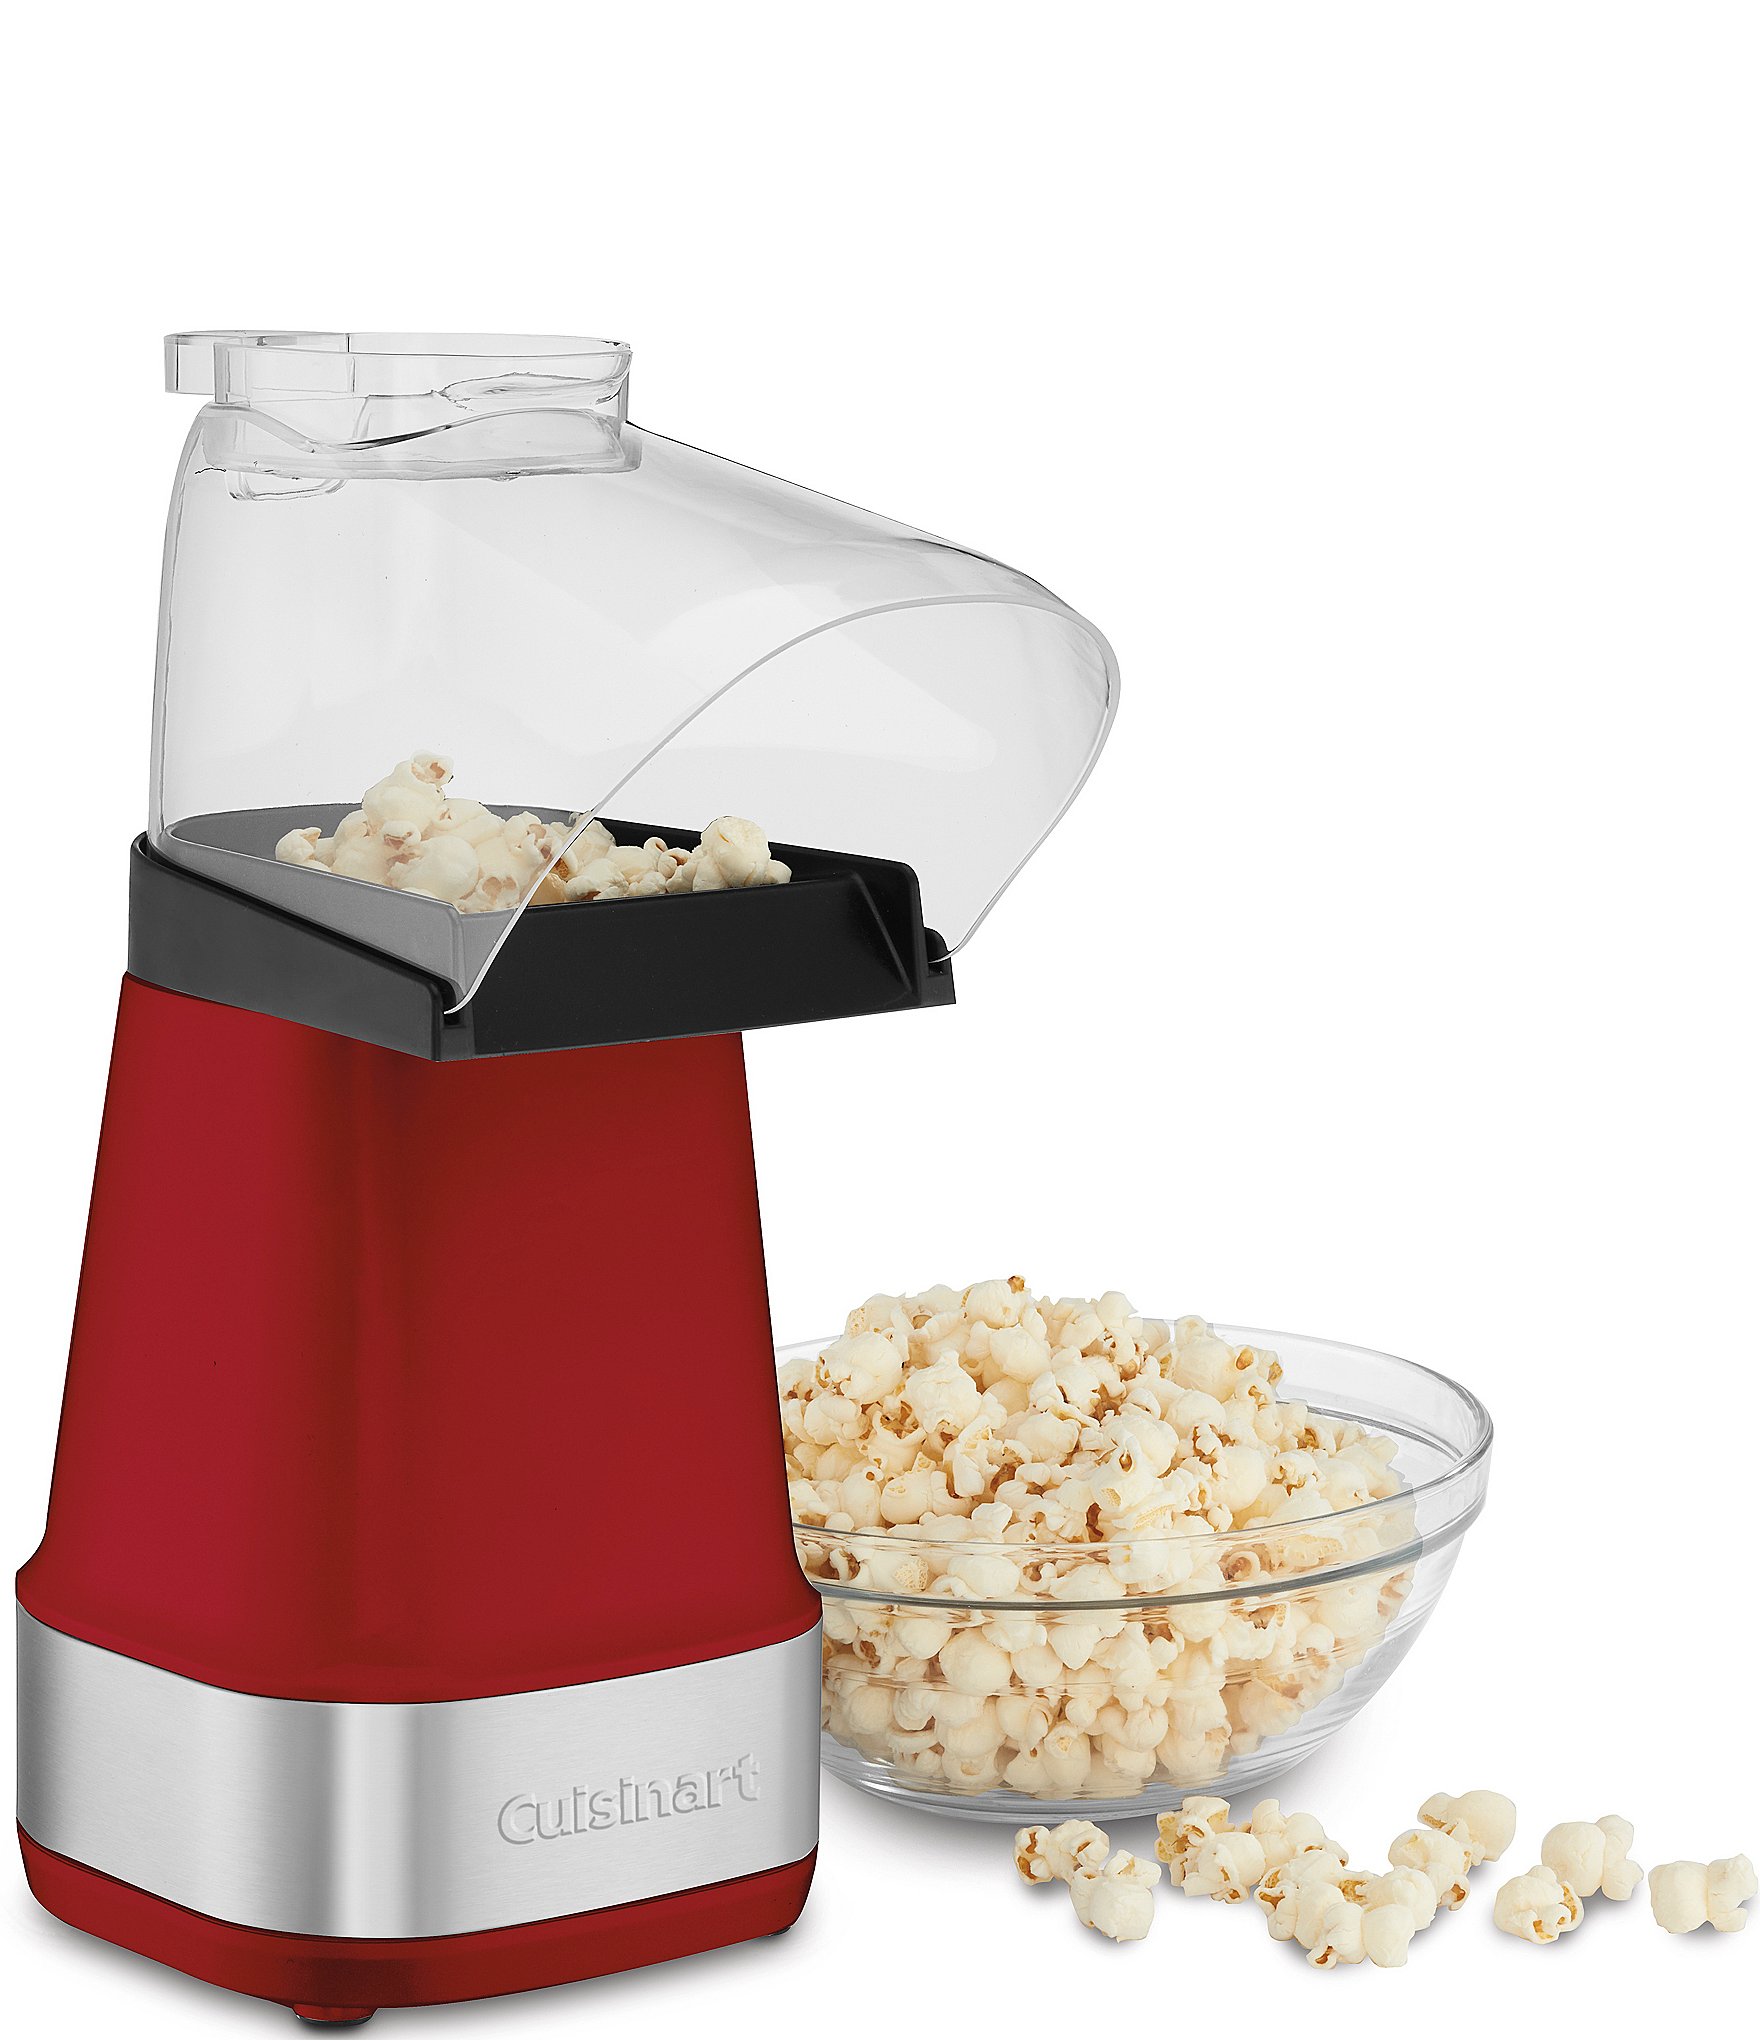 EasyPop Plus™ Flavored Popcorn Maker